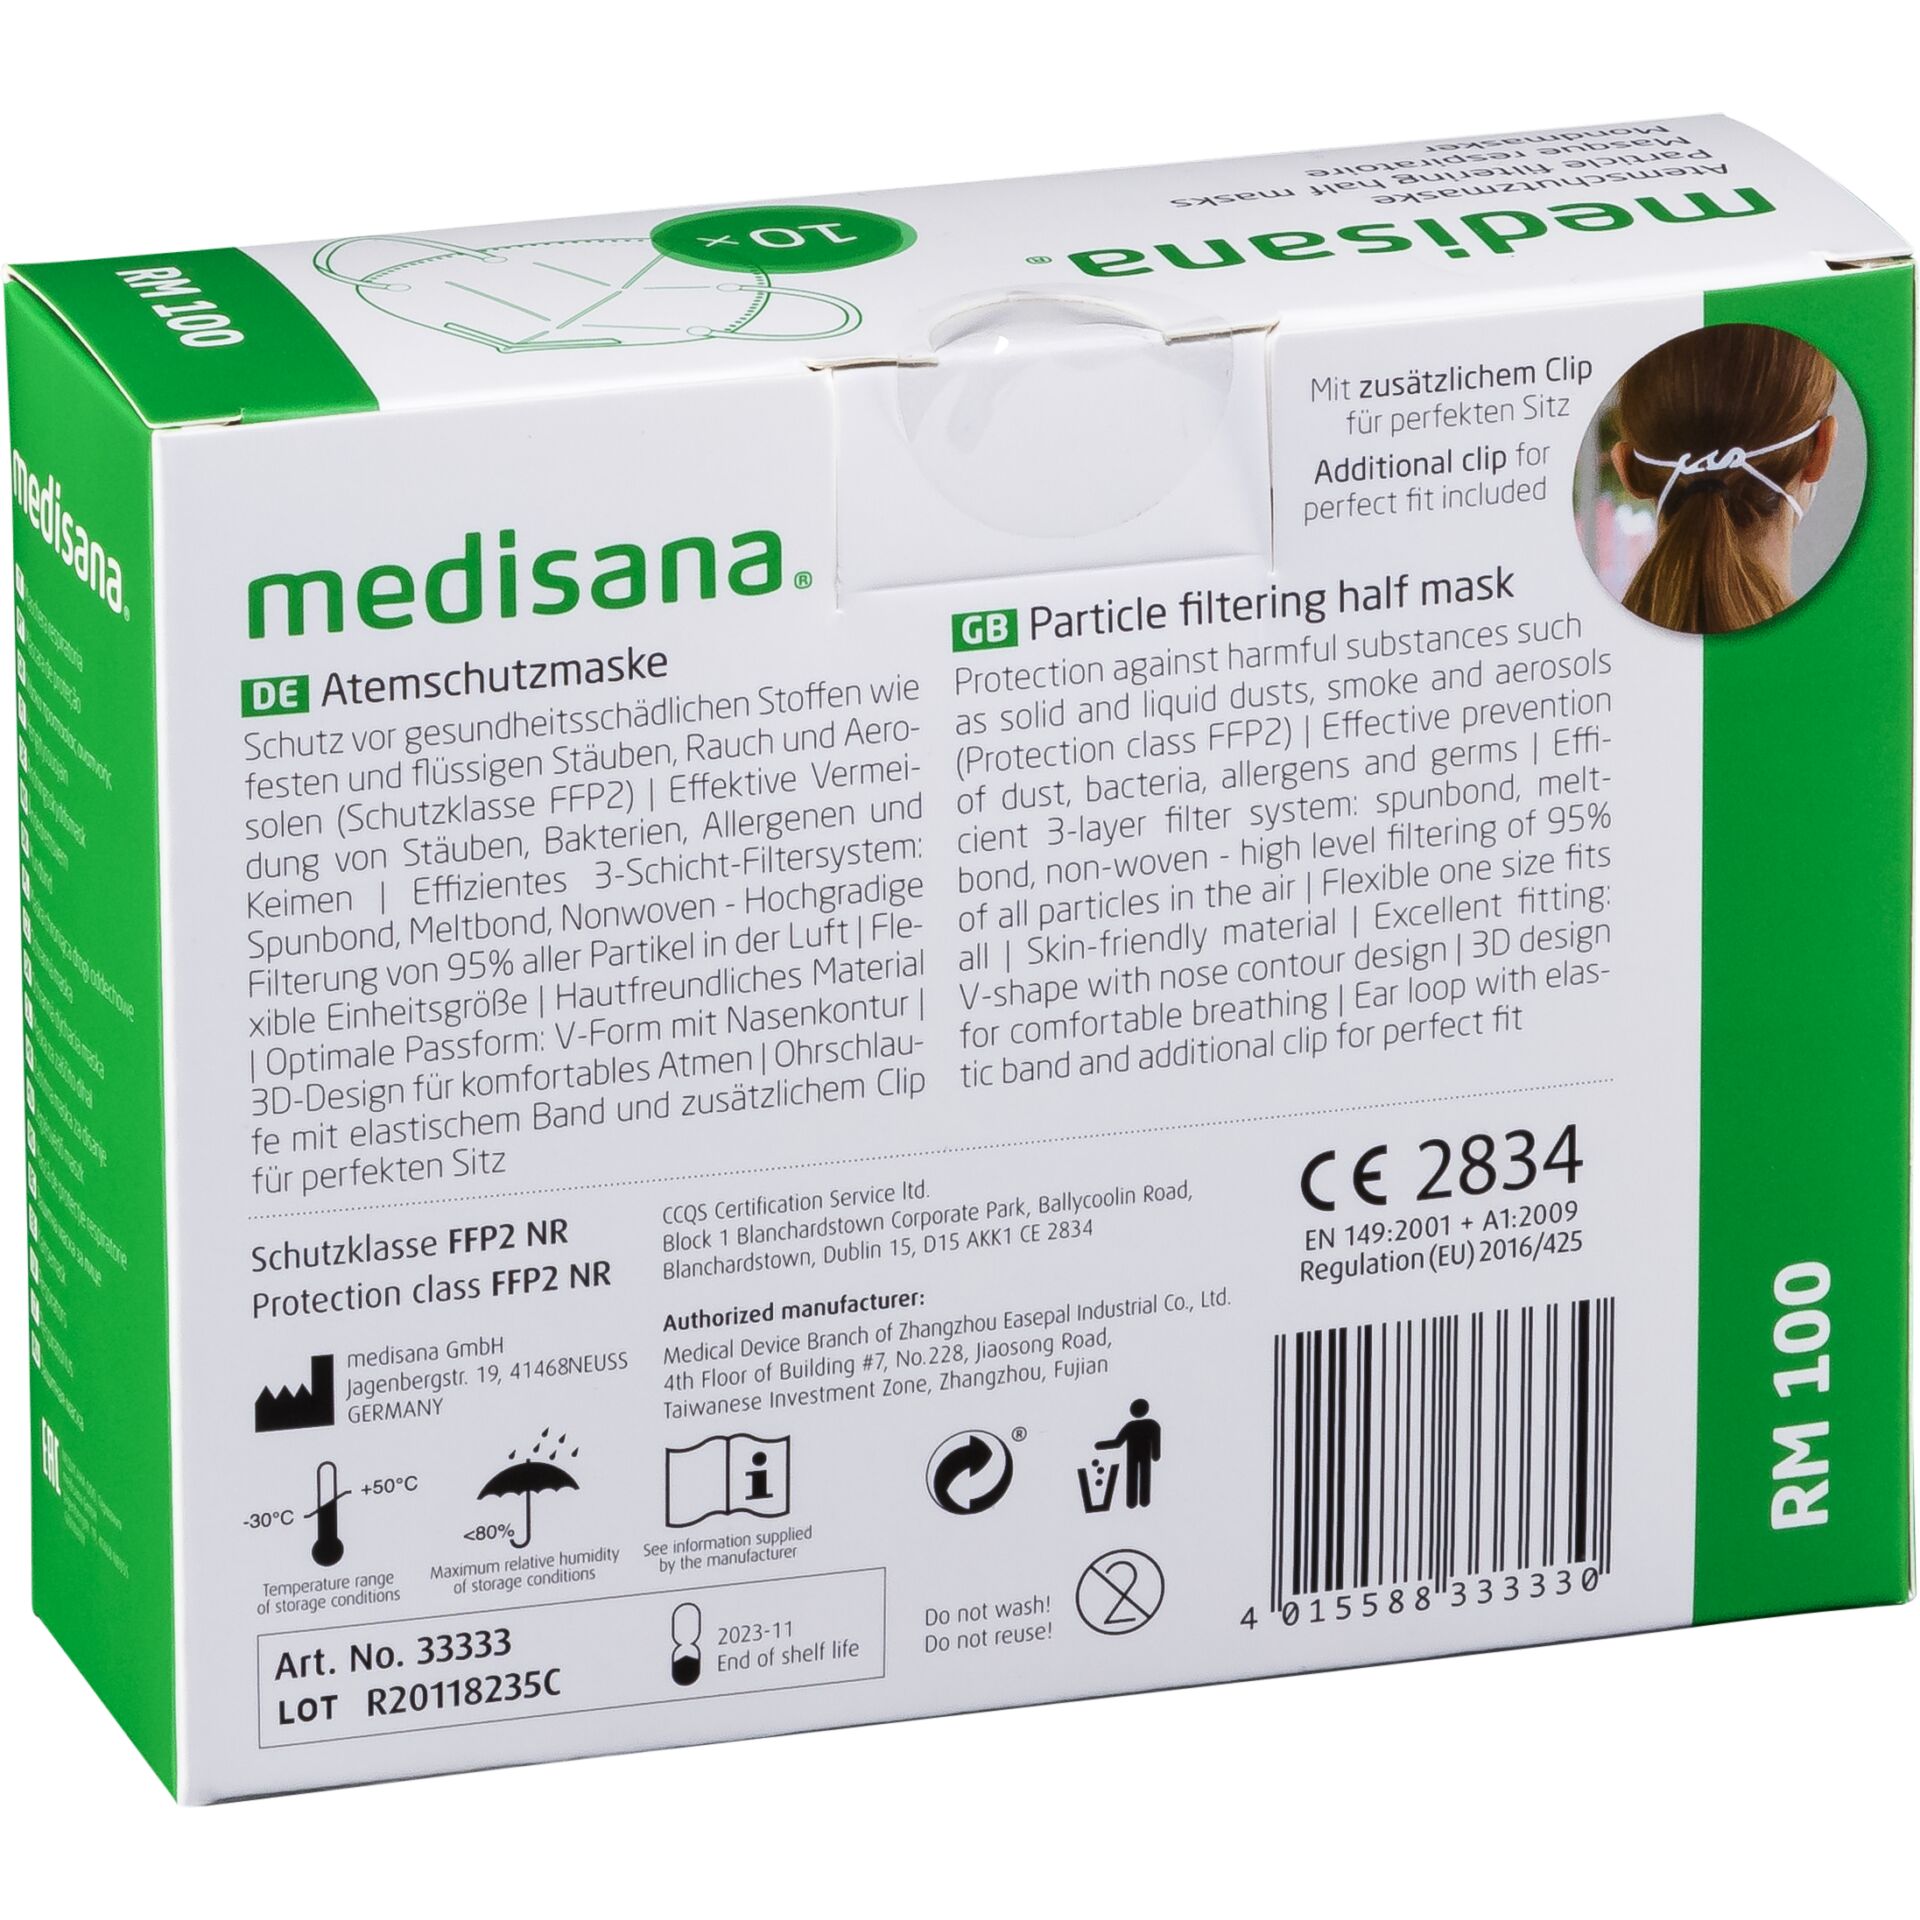 -Medisana 10 Atemschutzmaske 100 Medisana Hardware/Electronic -RM X FFP2